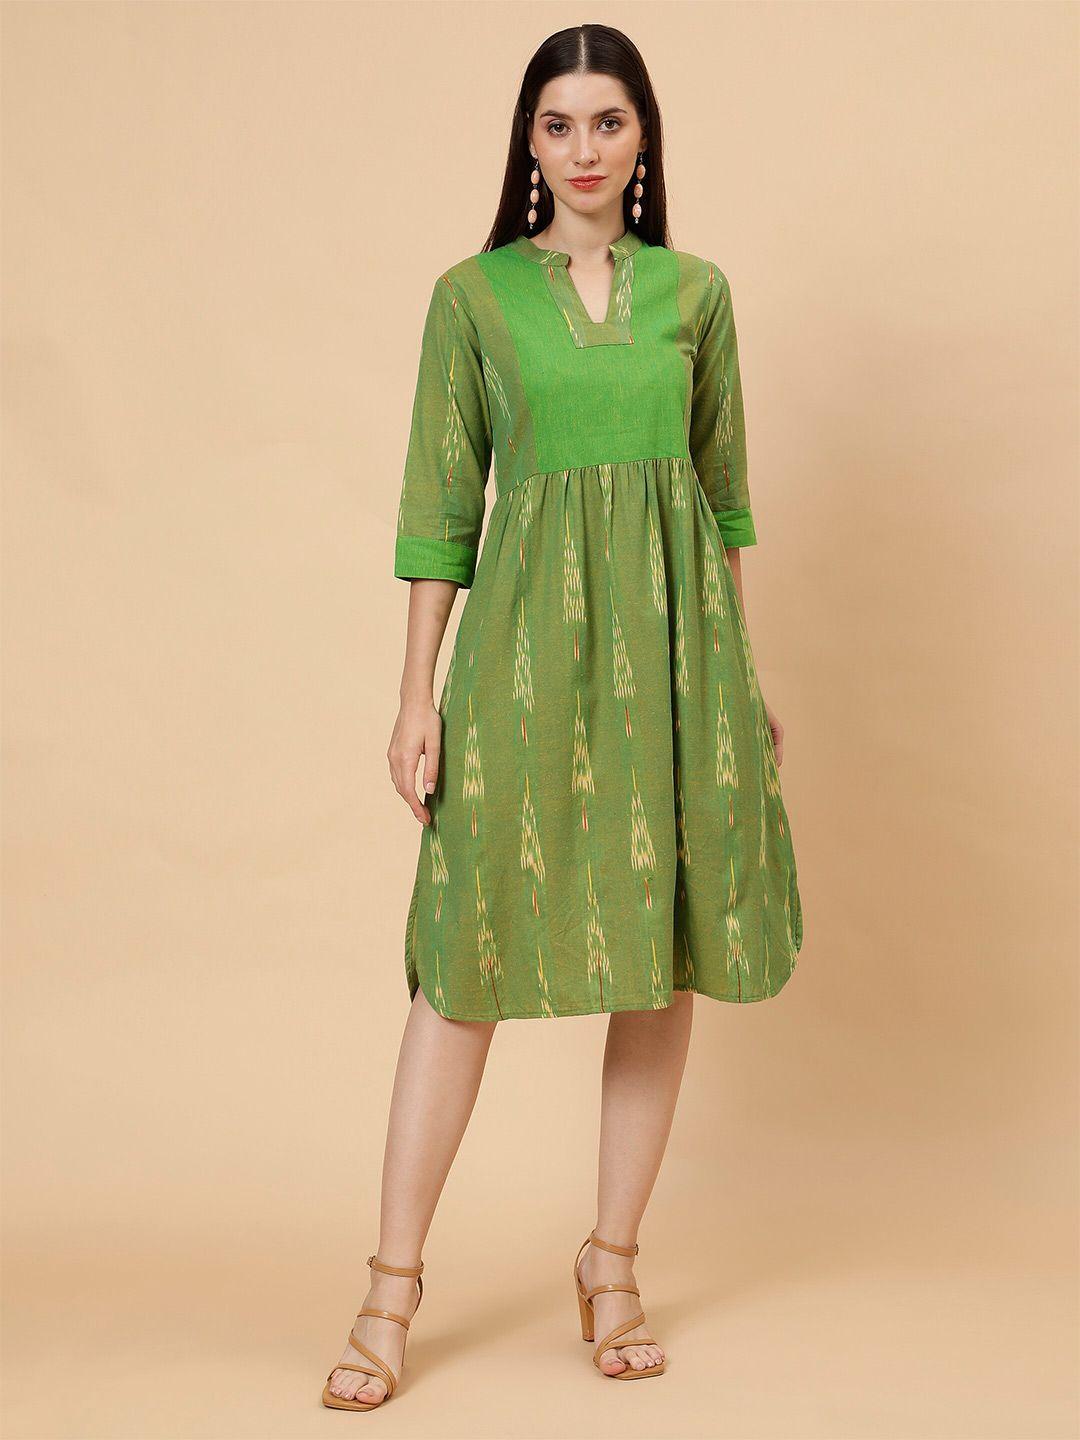 cot'n soft green ethnic motifs print empire dress